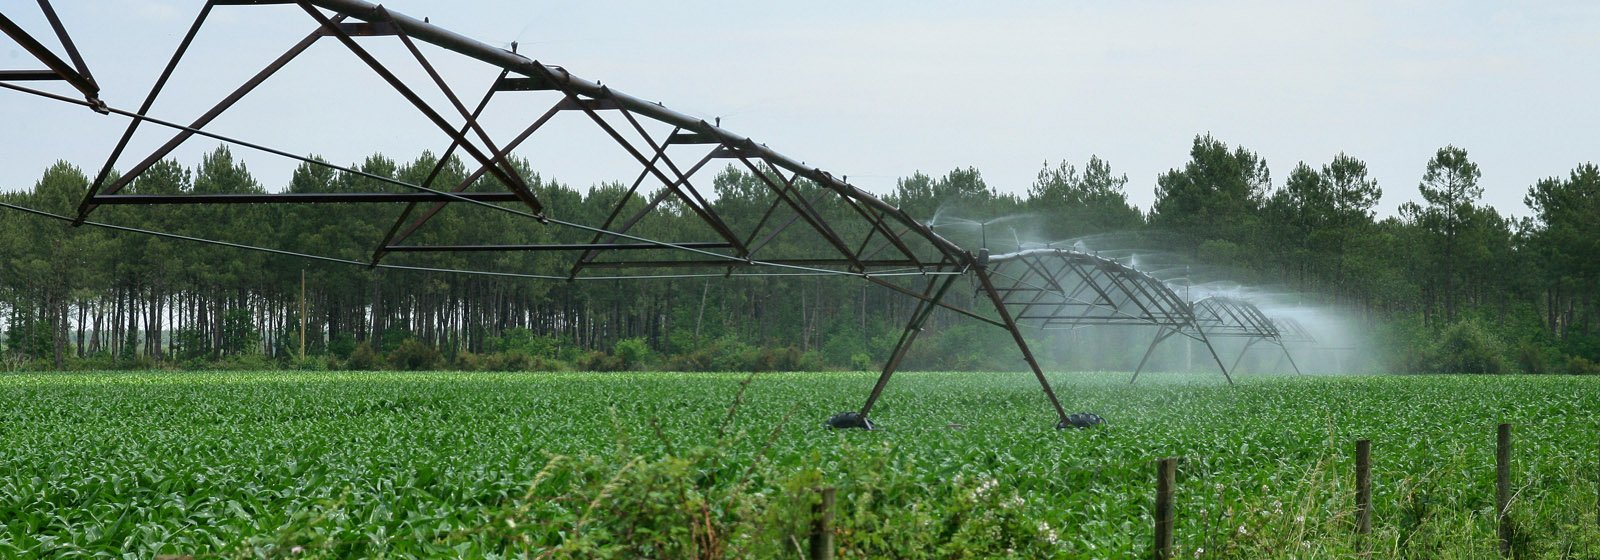 Armony du Feu - irrigation agricole